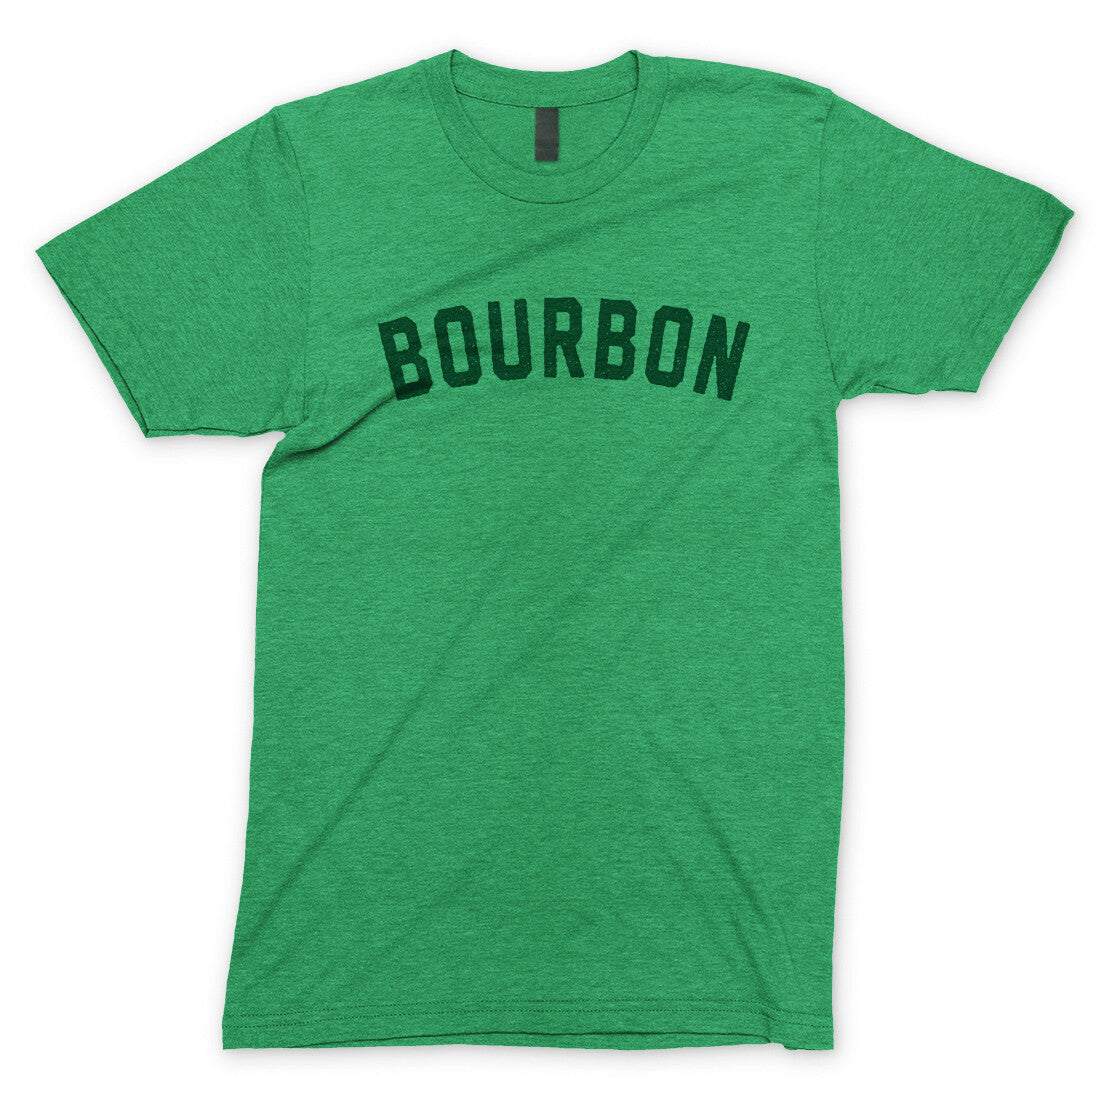 Bourbon in Heather Irish Green Color